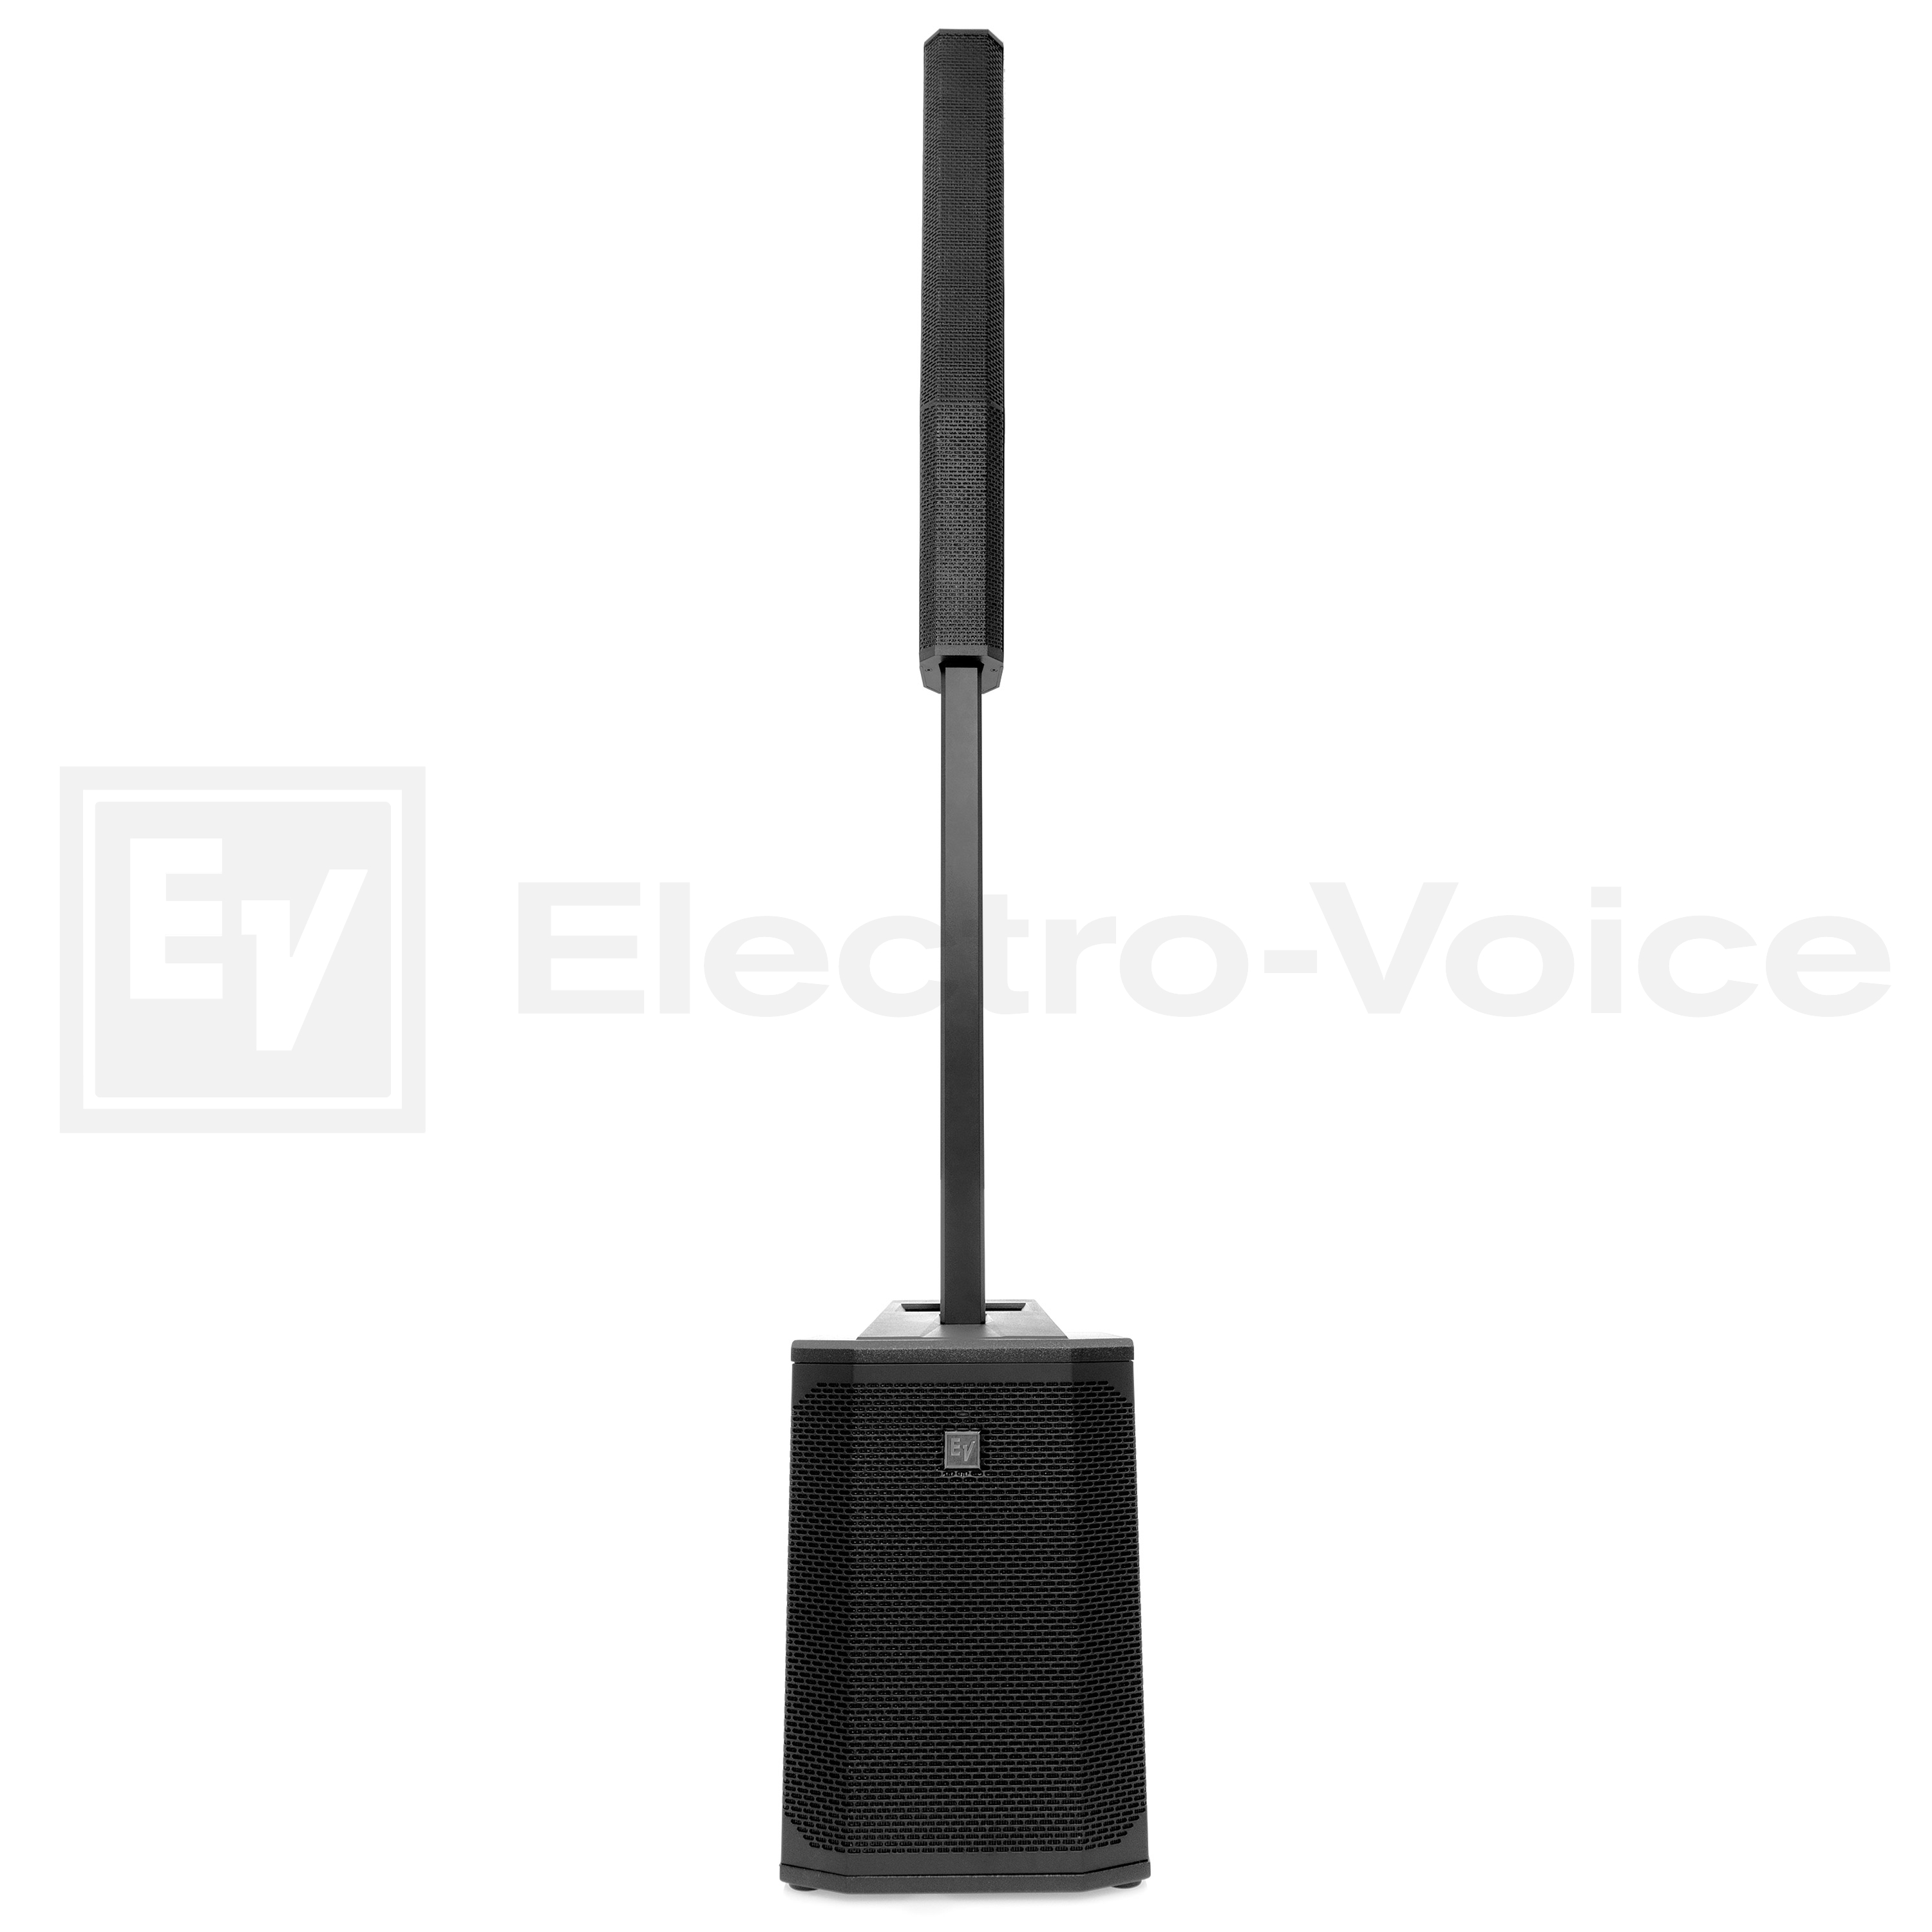 EVOLVE 50M KB Electro-Voice